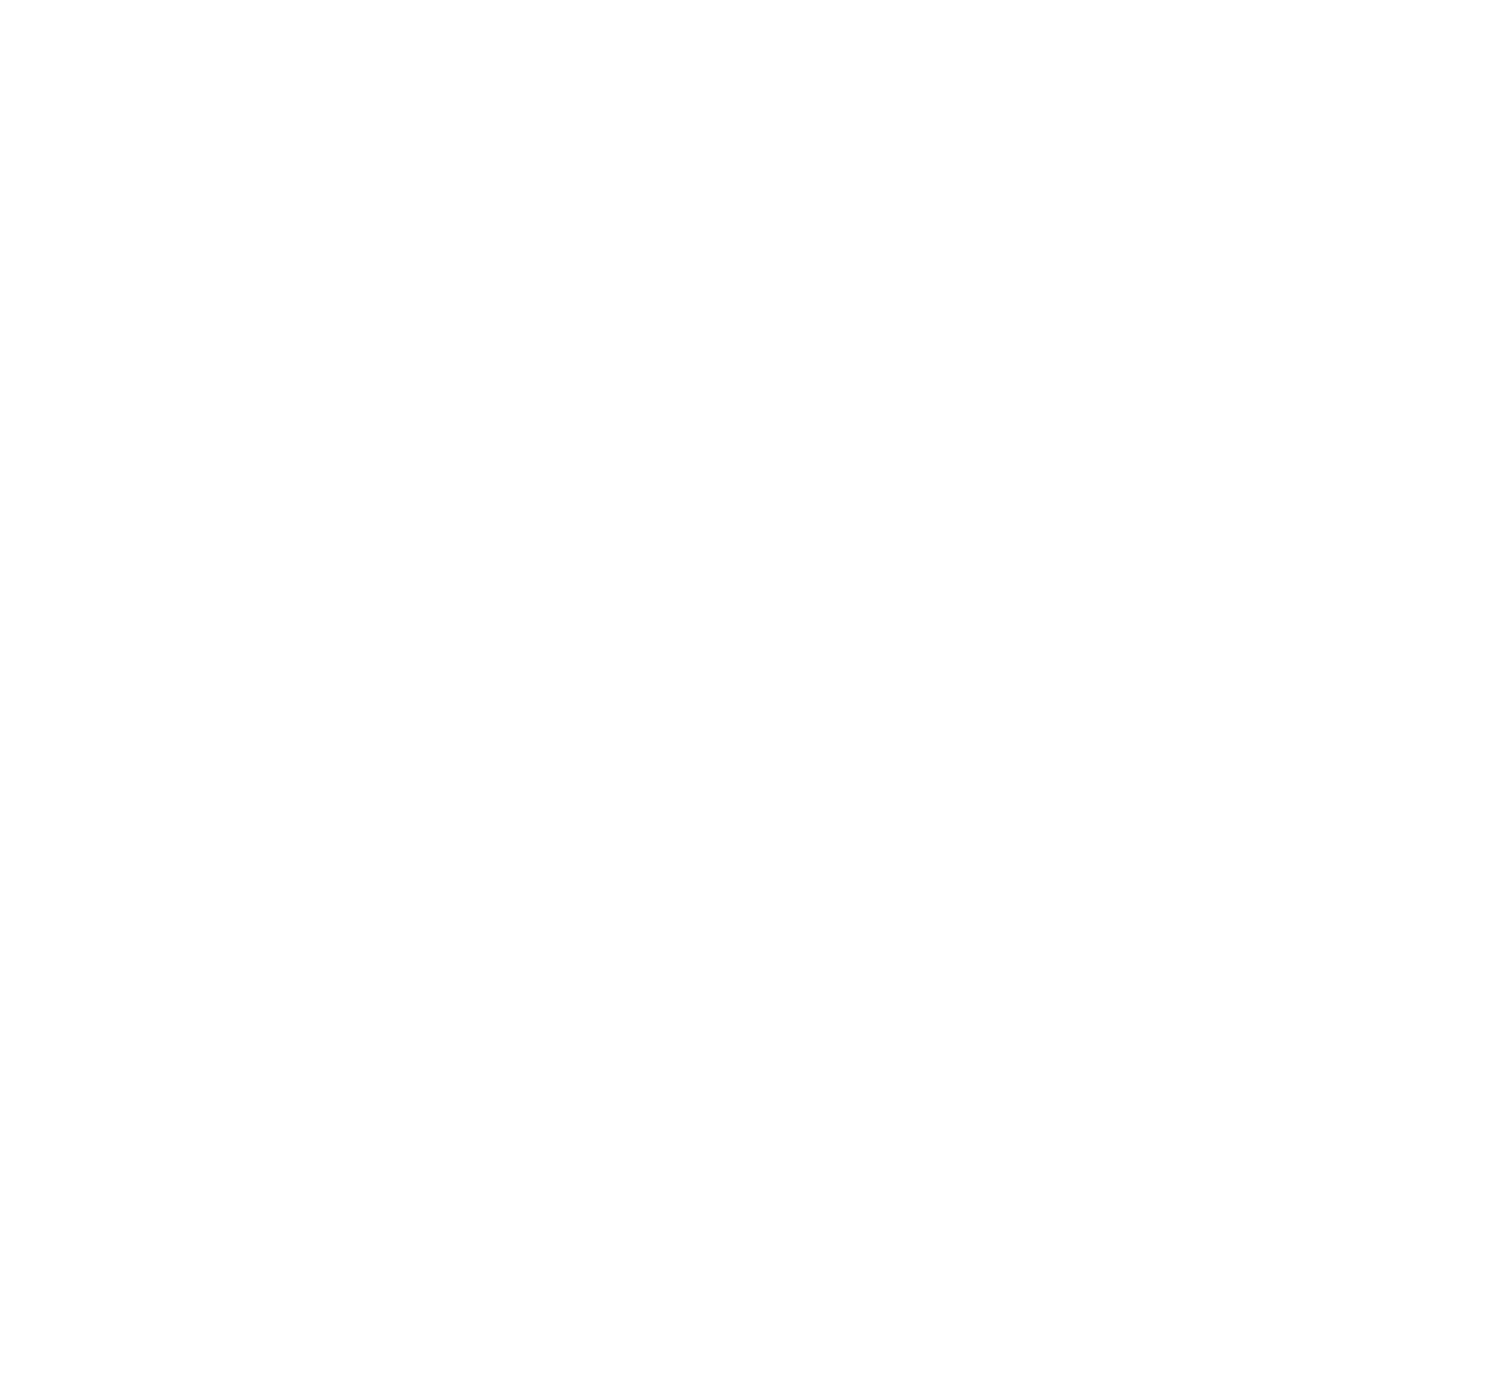 Mike Thakur